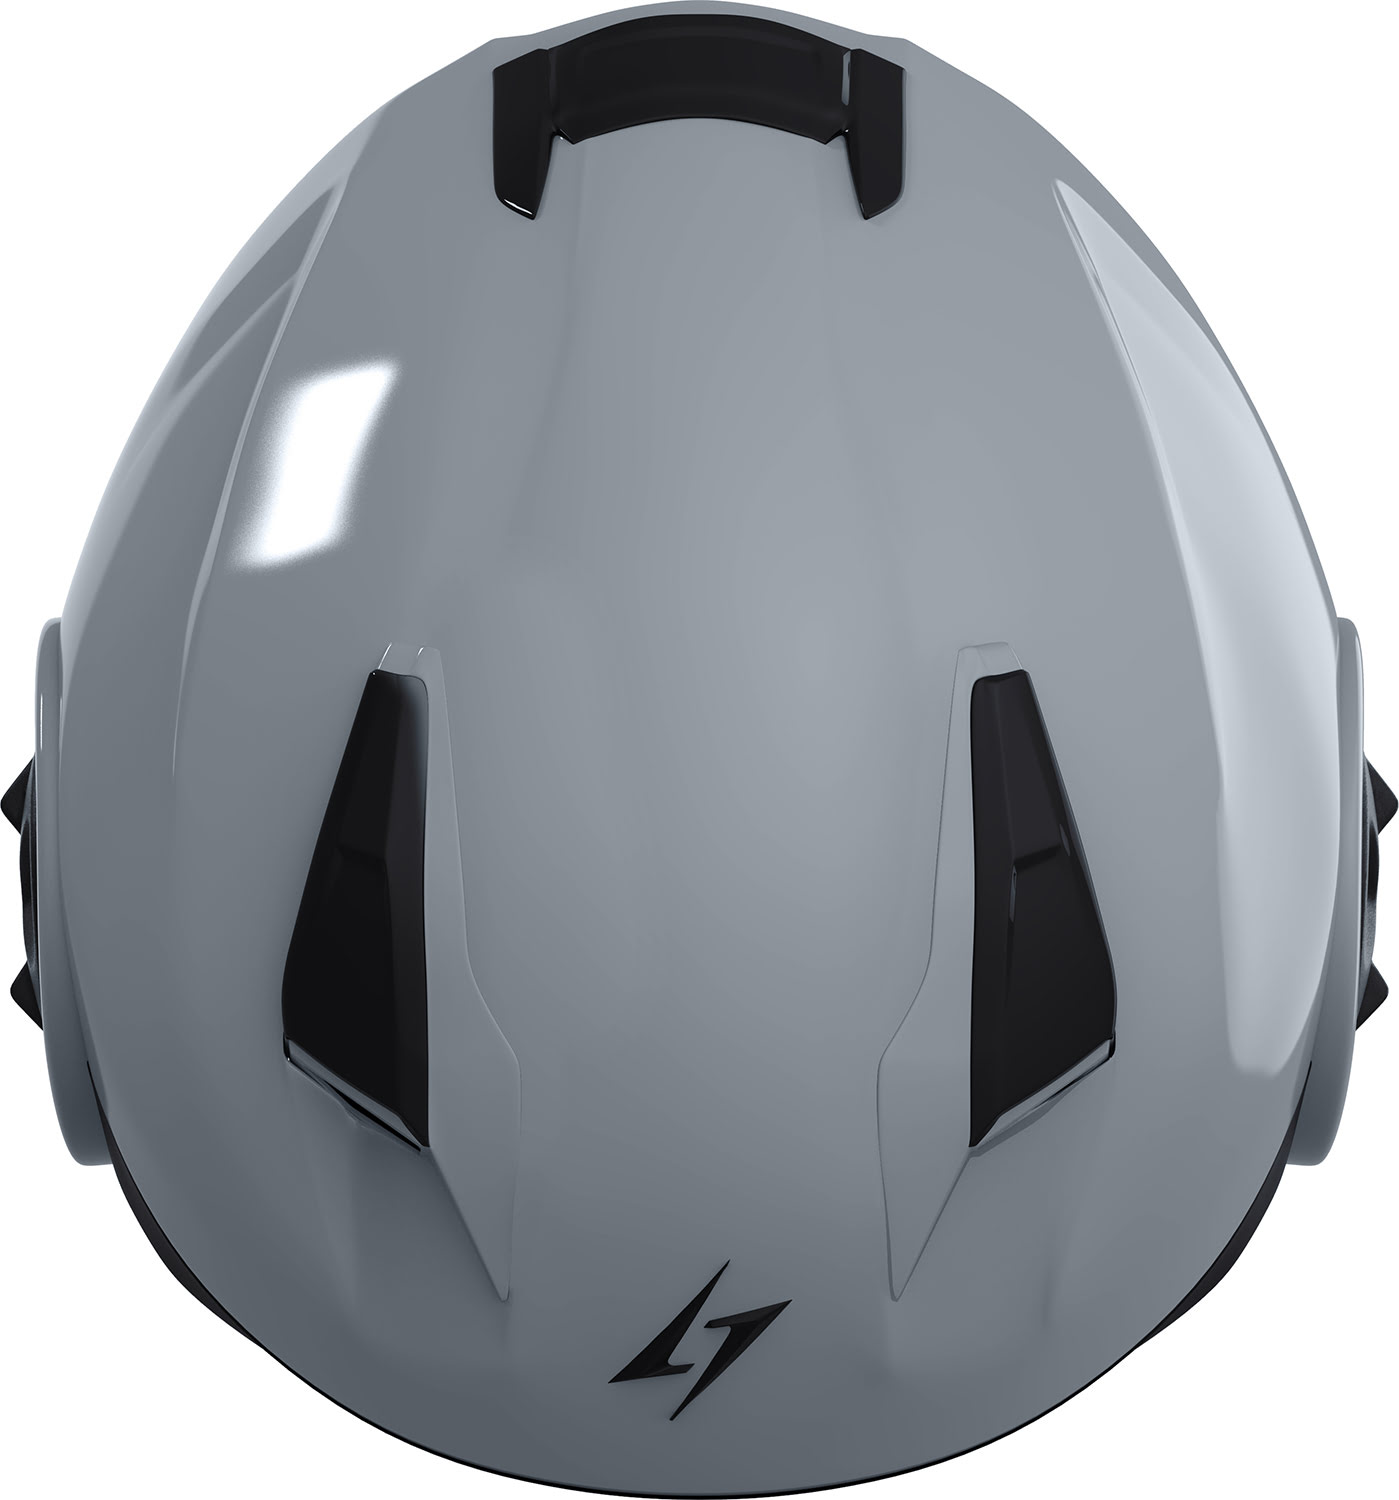 Helmet TREND SOLID Nardo Grey Glossy STORMER 